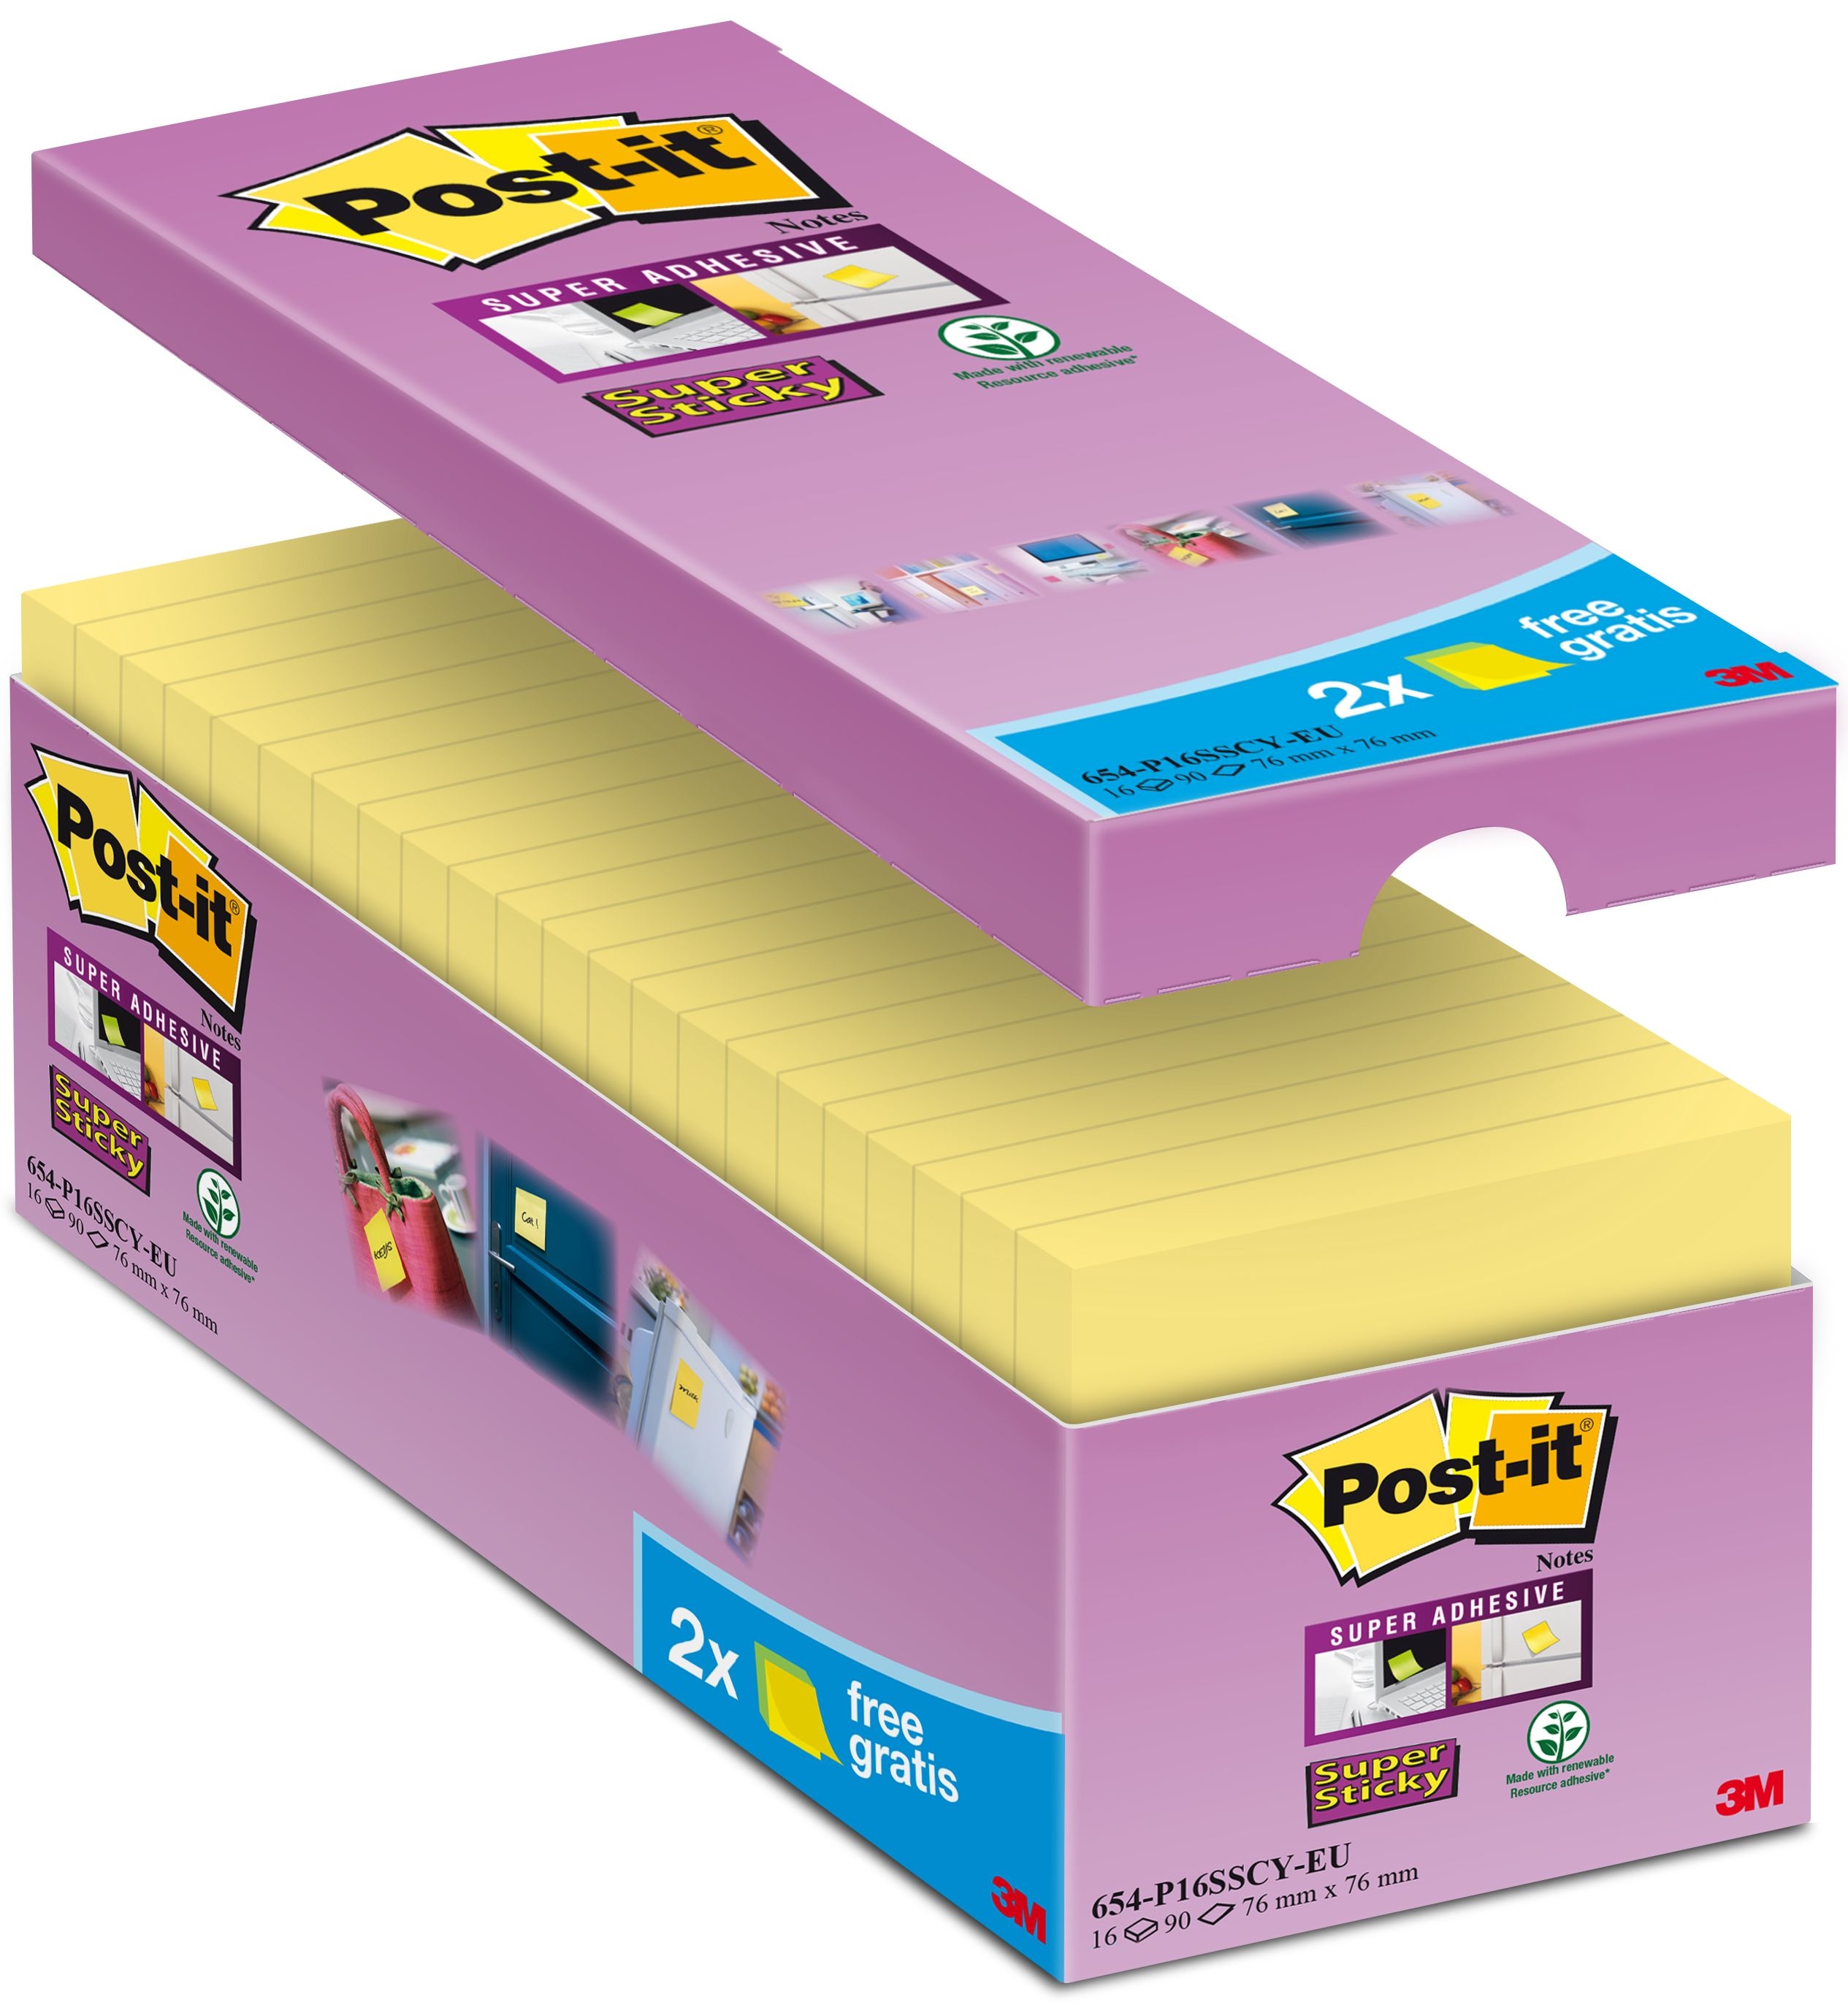 POST-IT Super Sticky Notes 654-P16SSCY-EU 76x76mm jaune 16x90f.